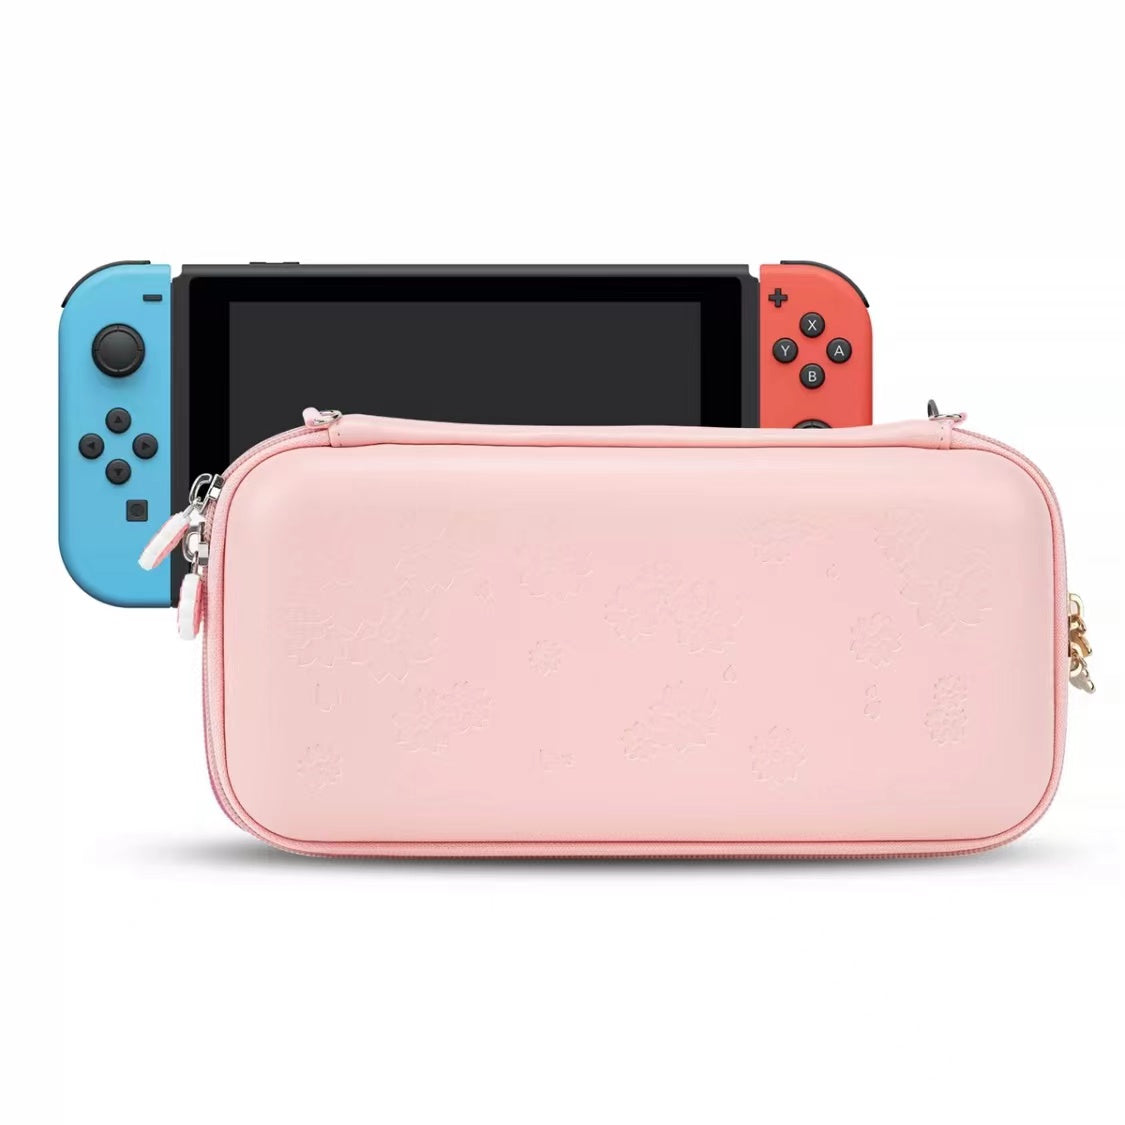 Wishaven ピンク サクラ Nintendo Switch キャリング ケース